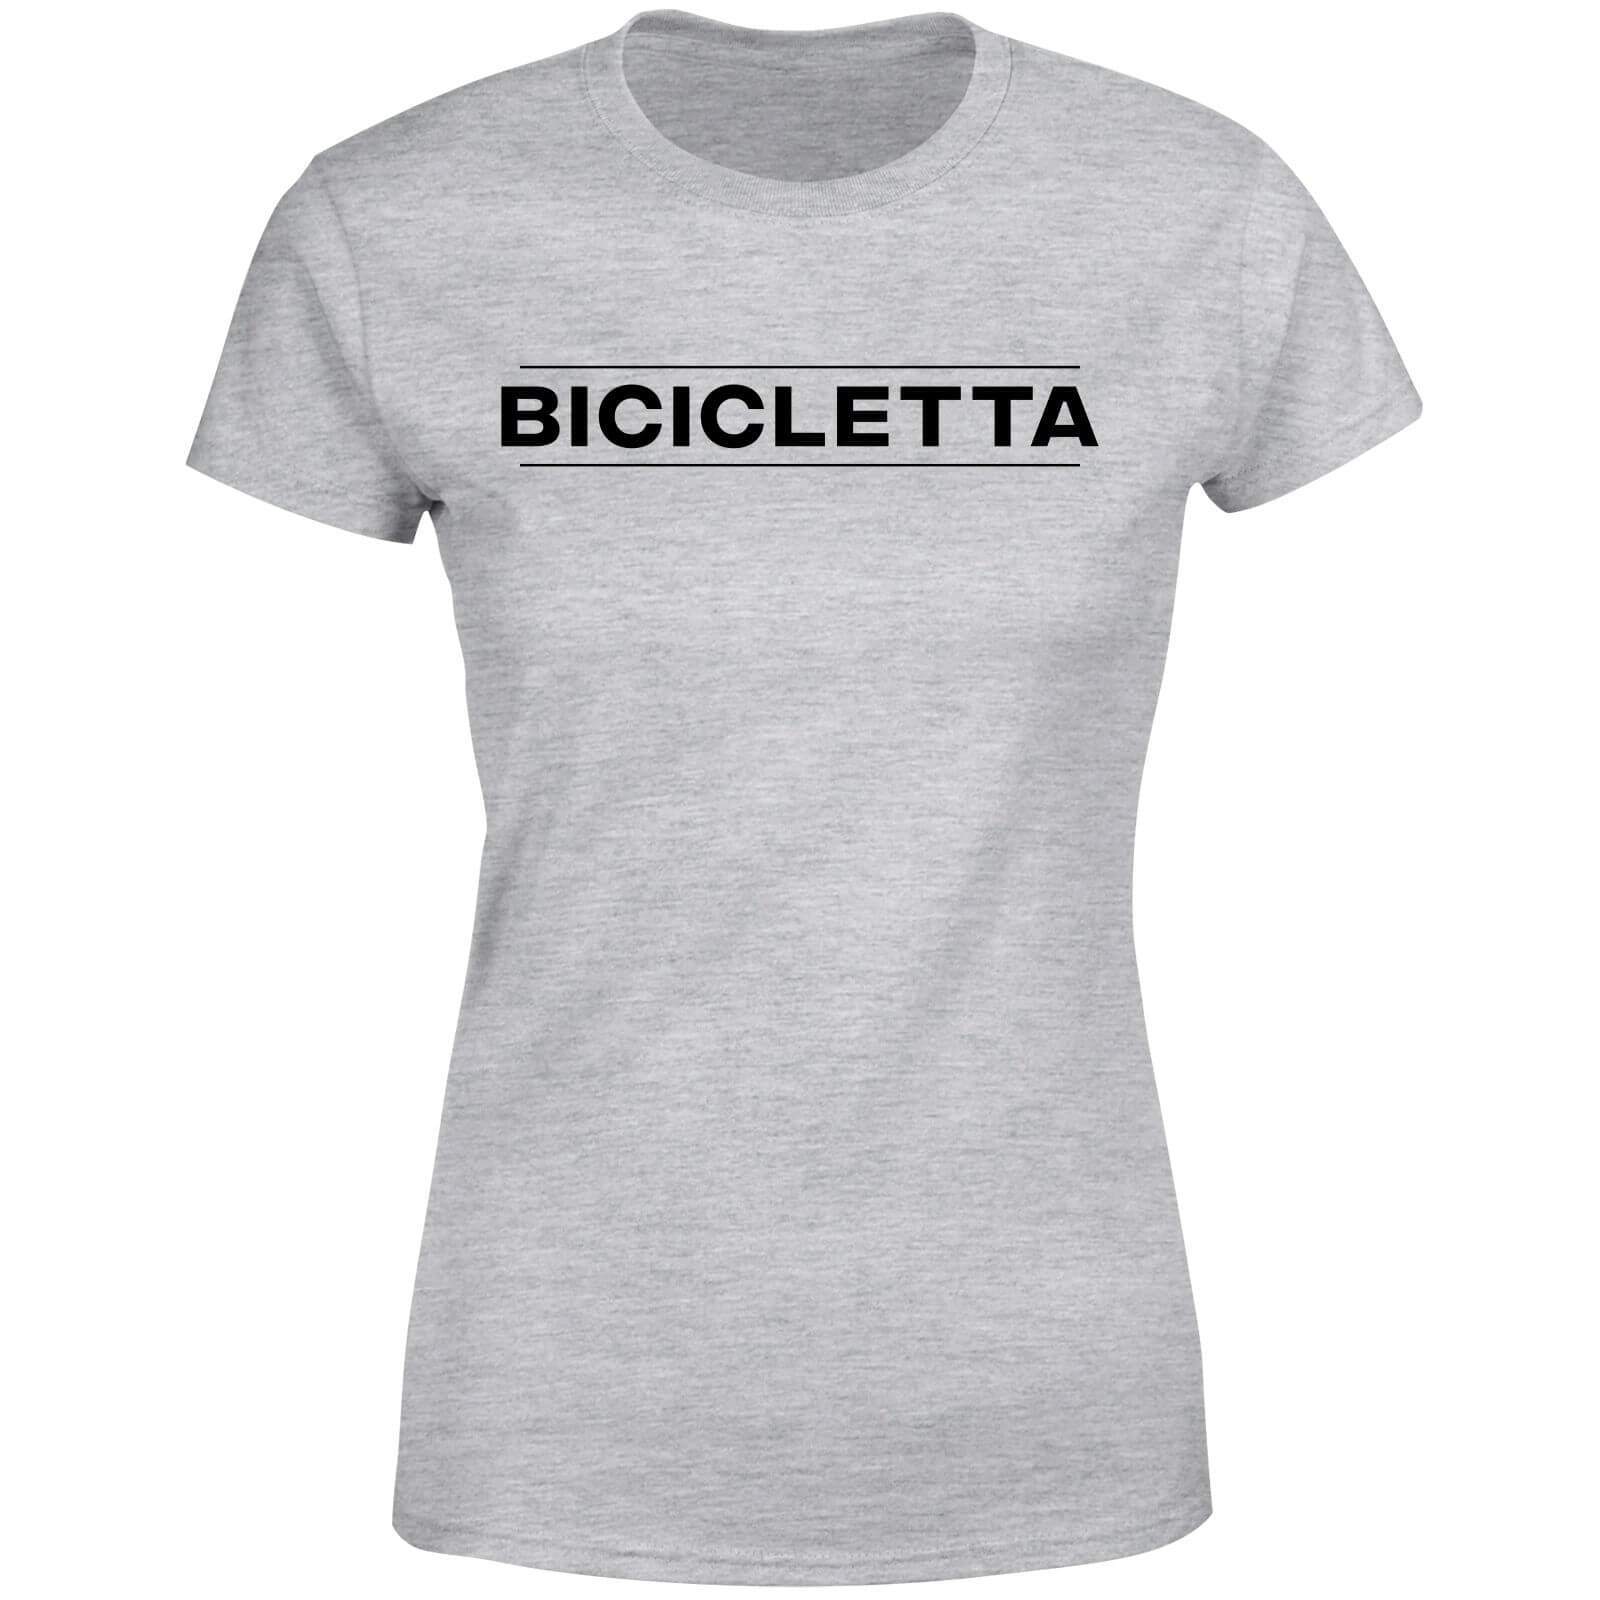 Bicicletta Women's T-Shirt - Grey - XS - Grey